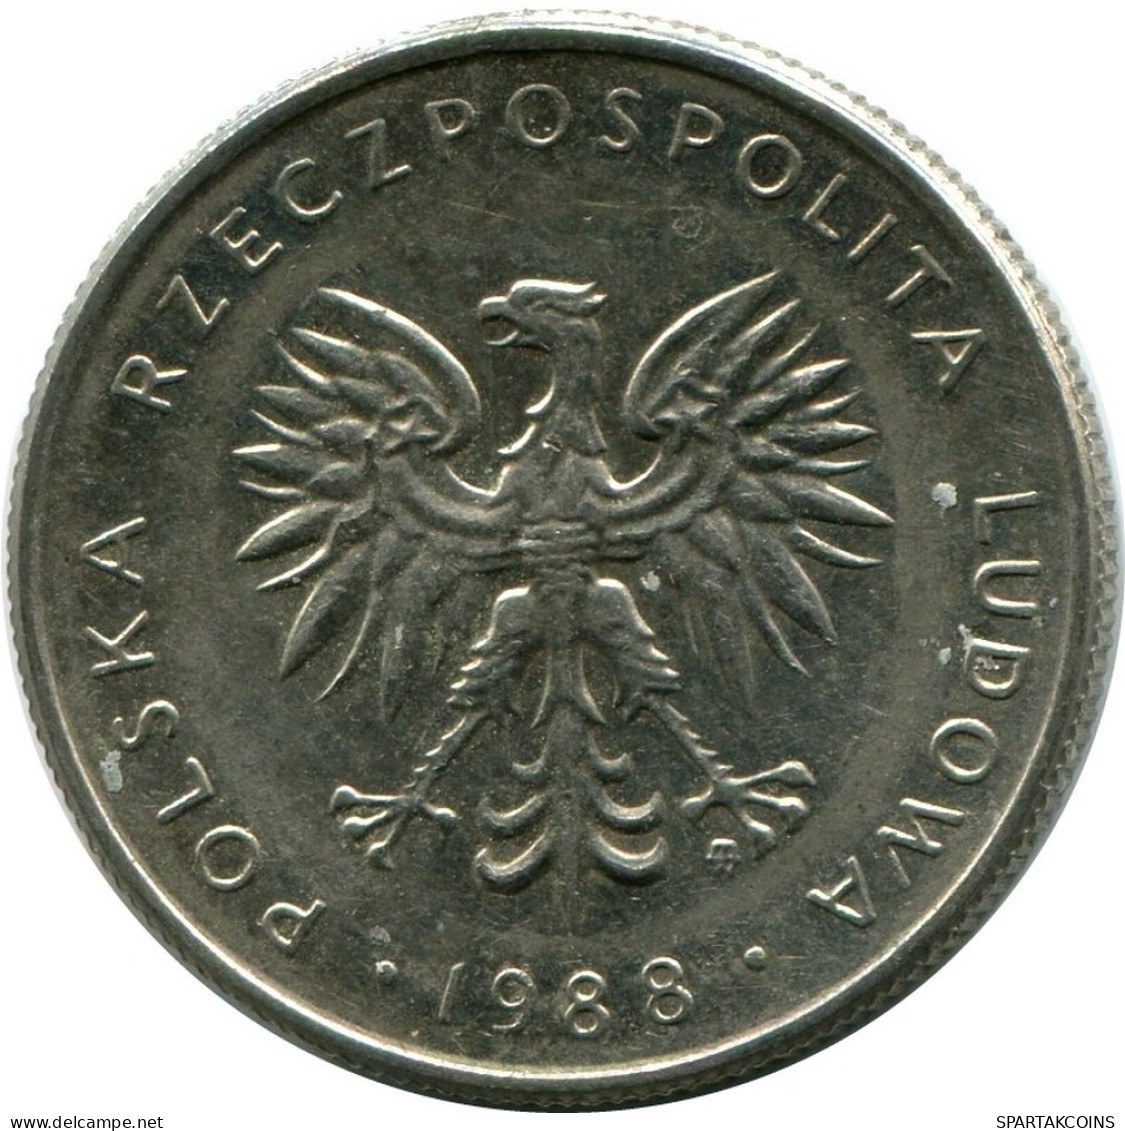 10 ZLOTYCH 1988 POLAND Coin #M10236.U.A - Poland